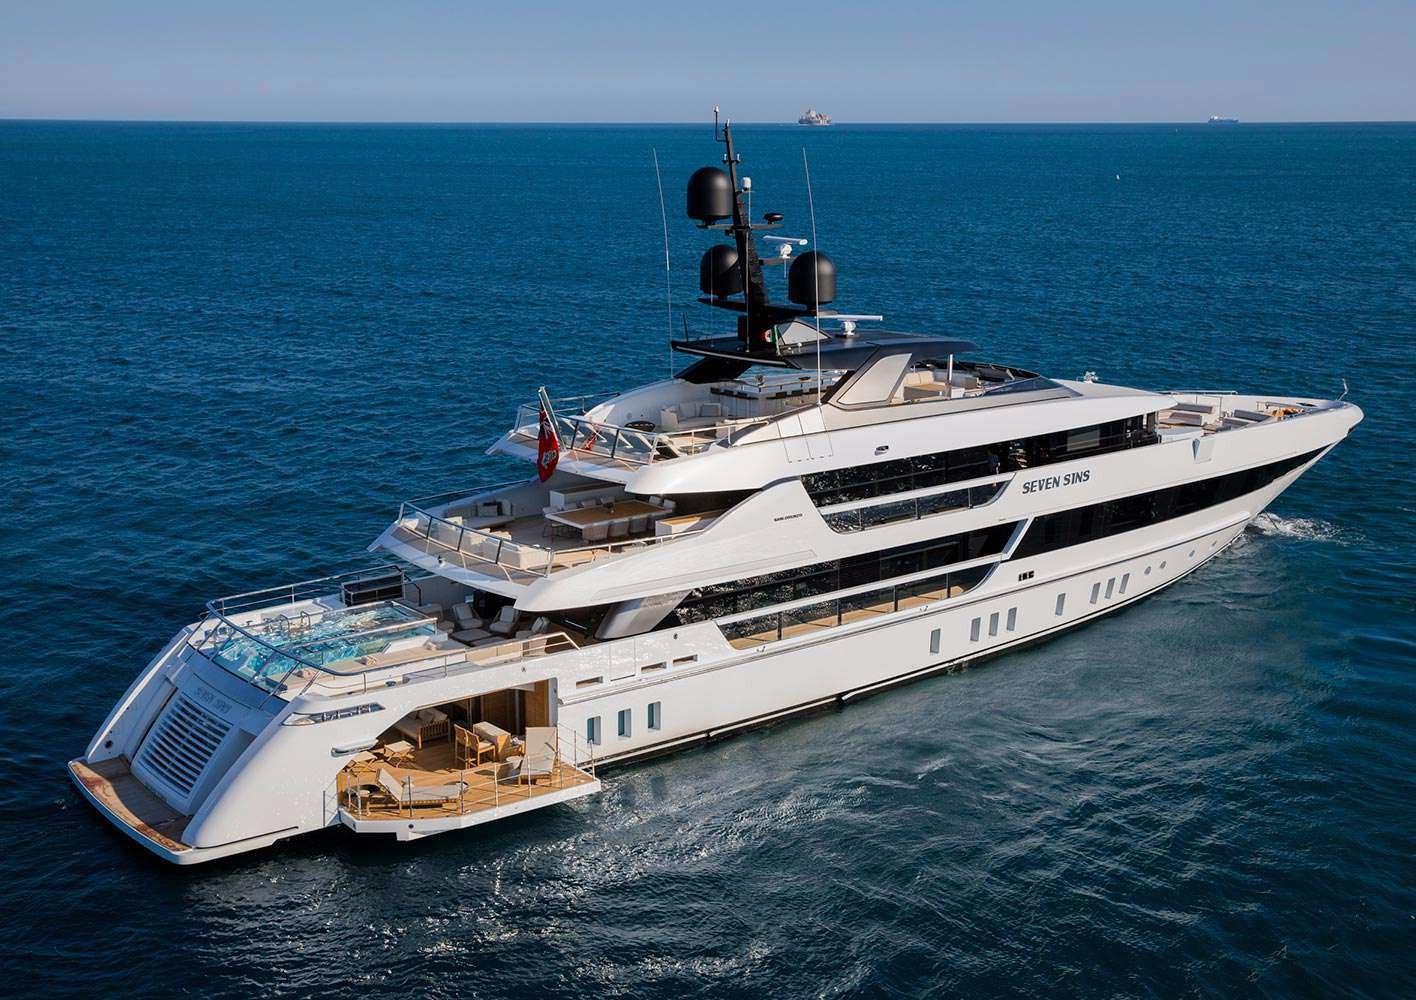 52 ft prestige yacht cost